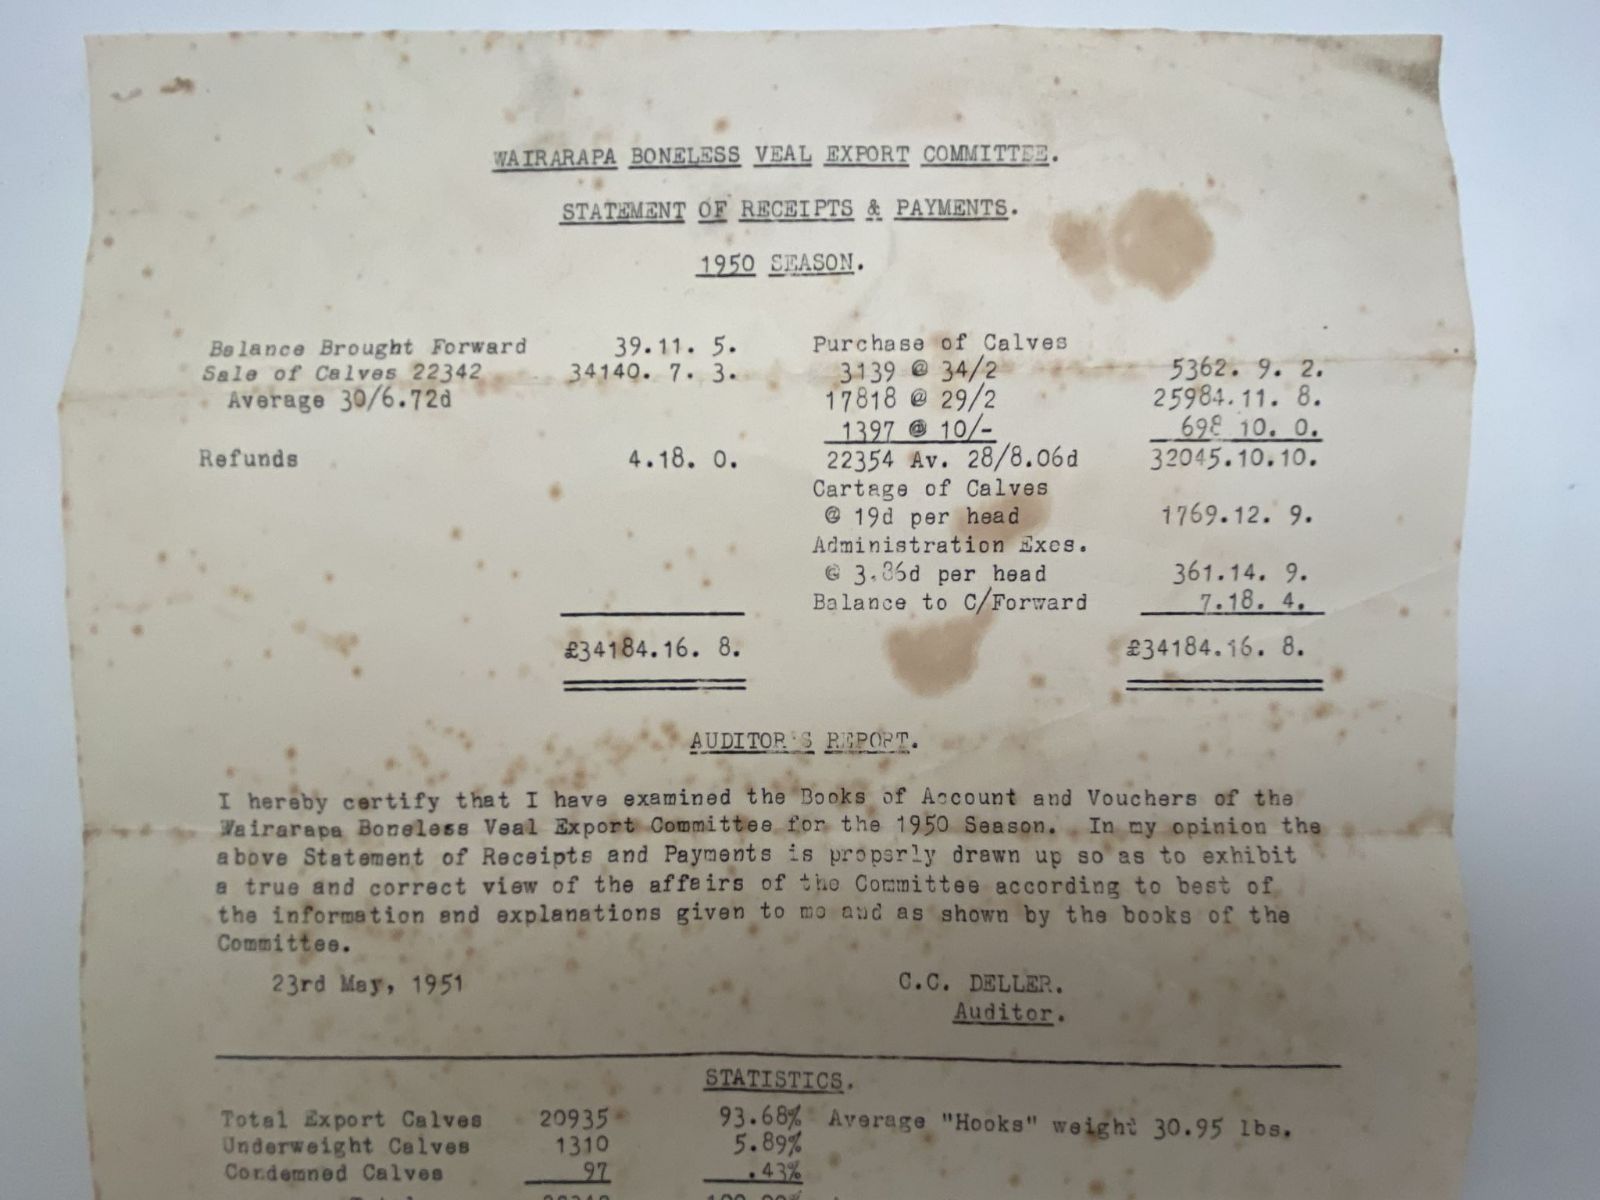 WAIRARAPA BONELESS VEAL EXPORT COMMITEE, Carterton - Statement 1950